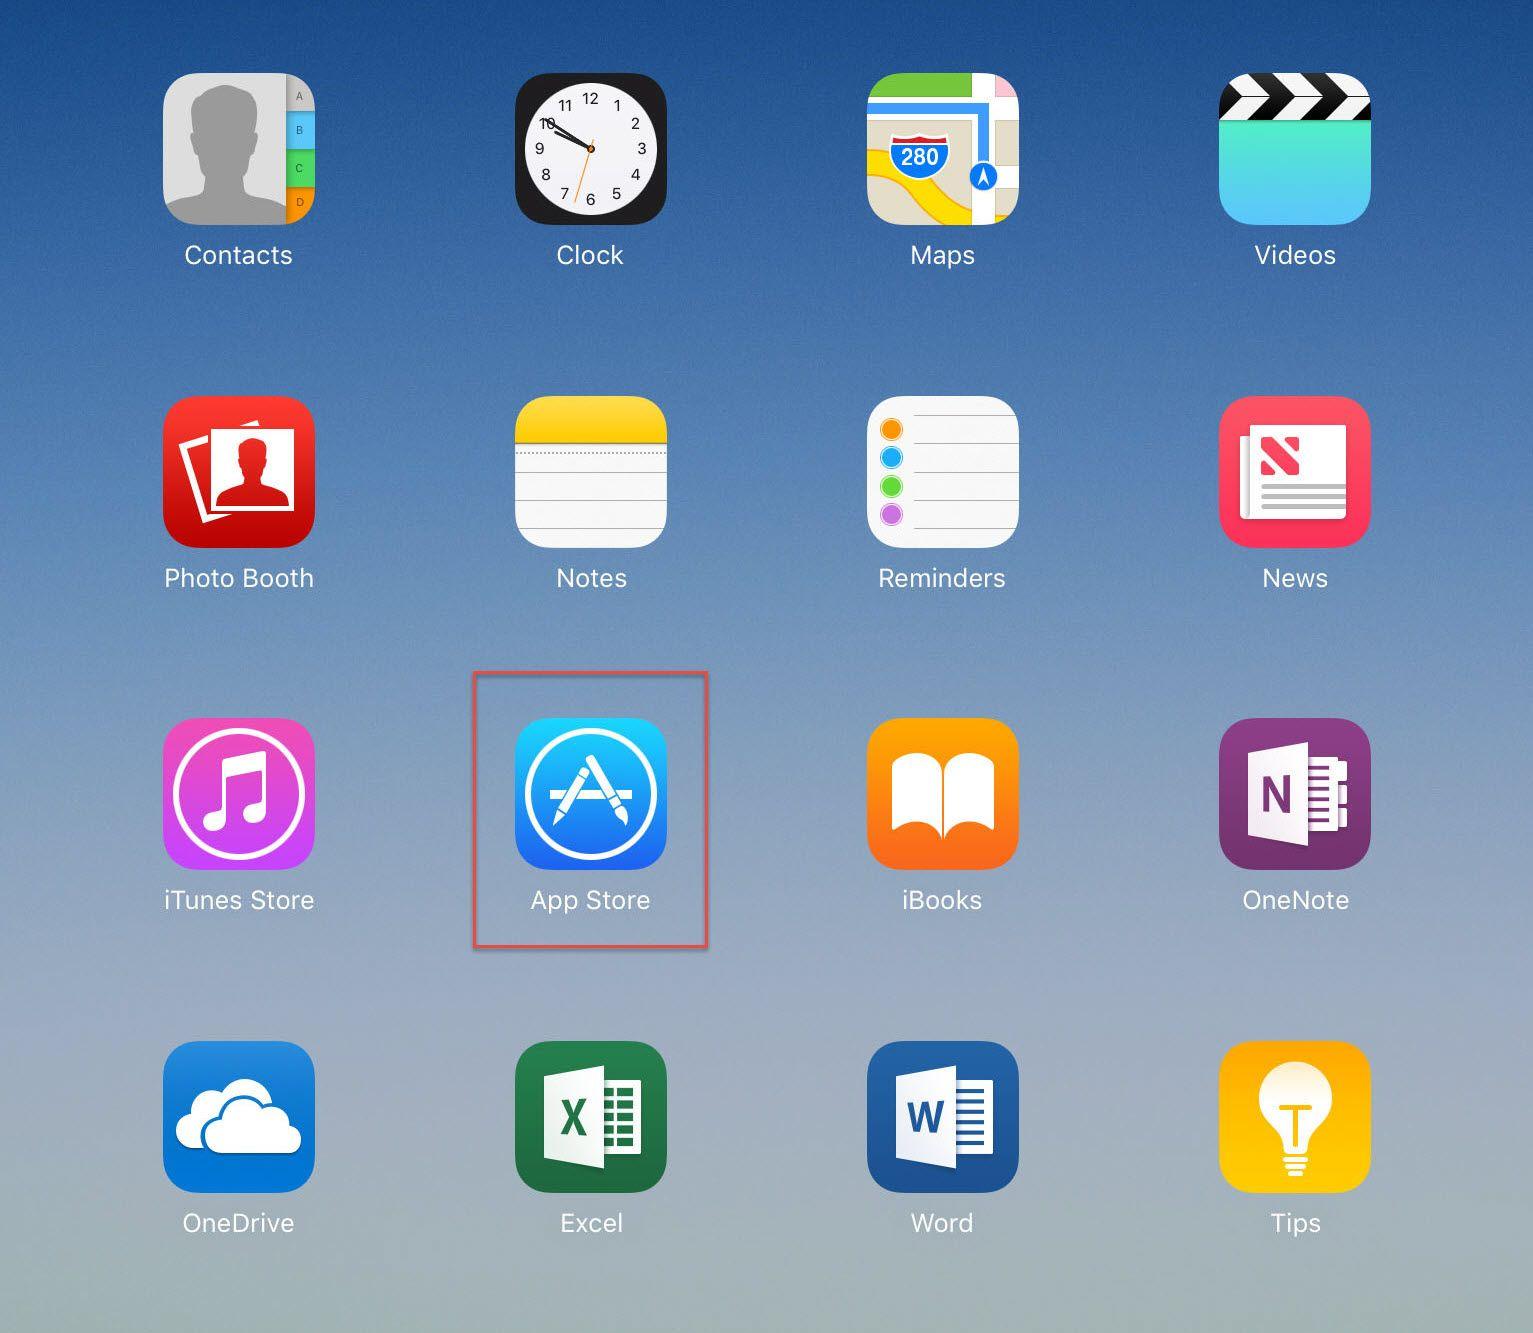 iPad App Logo - Downloading Blackboard Mobile Learn App on iPad or iPhone - Ferris ...